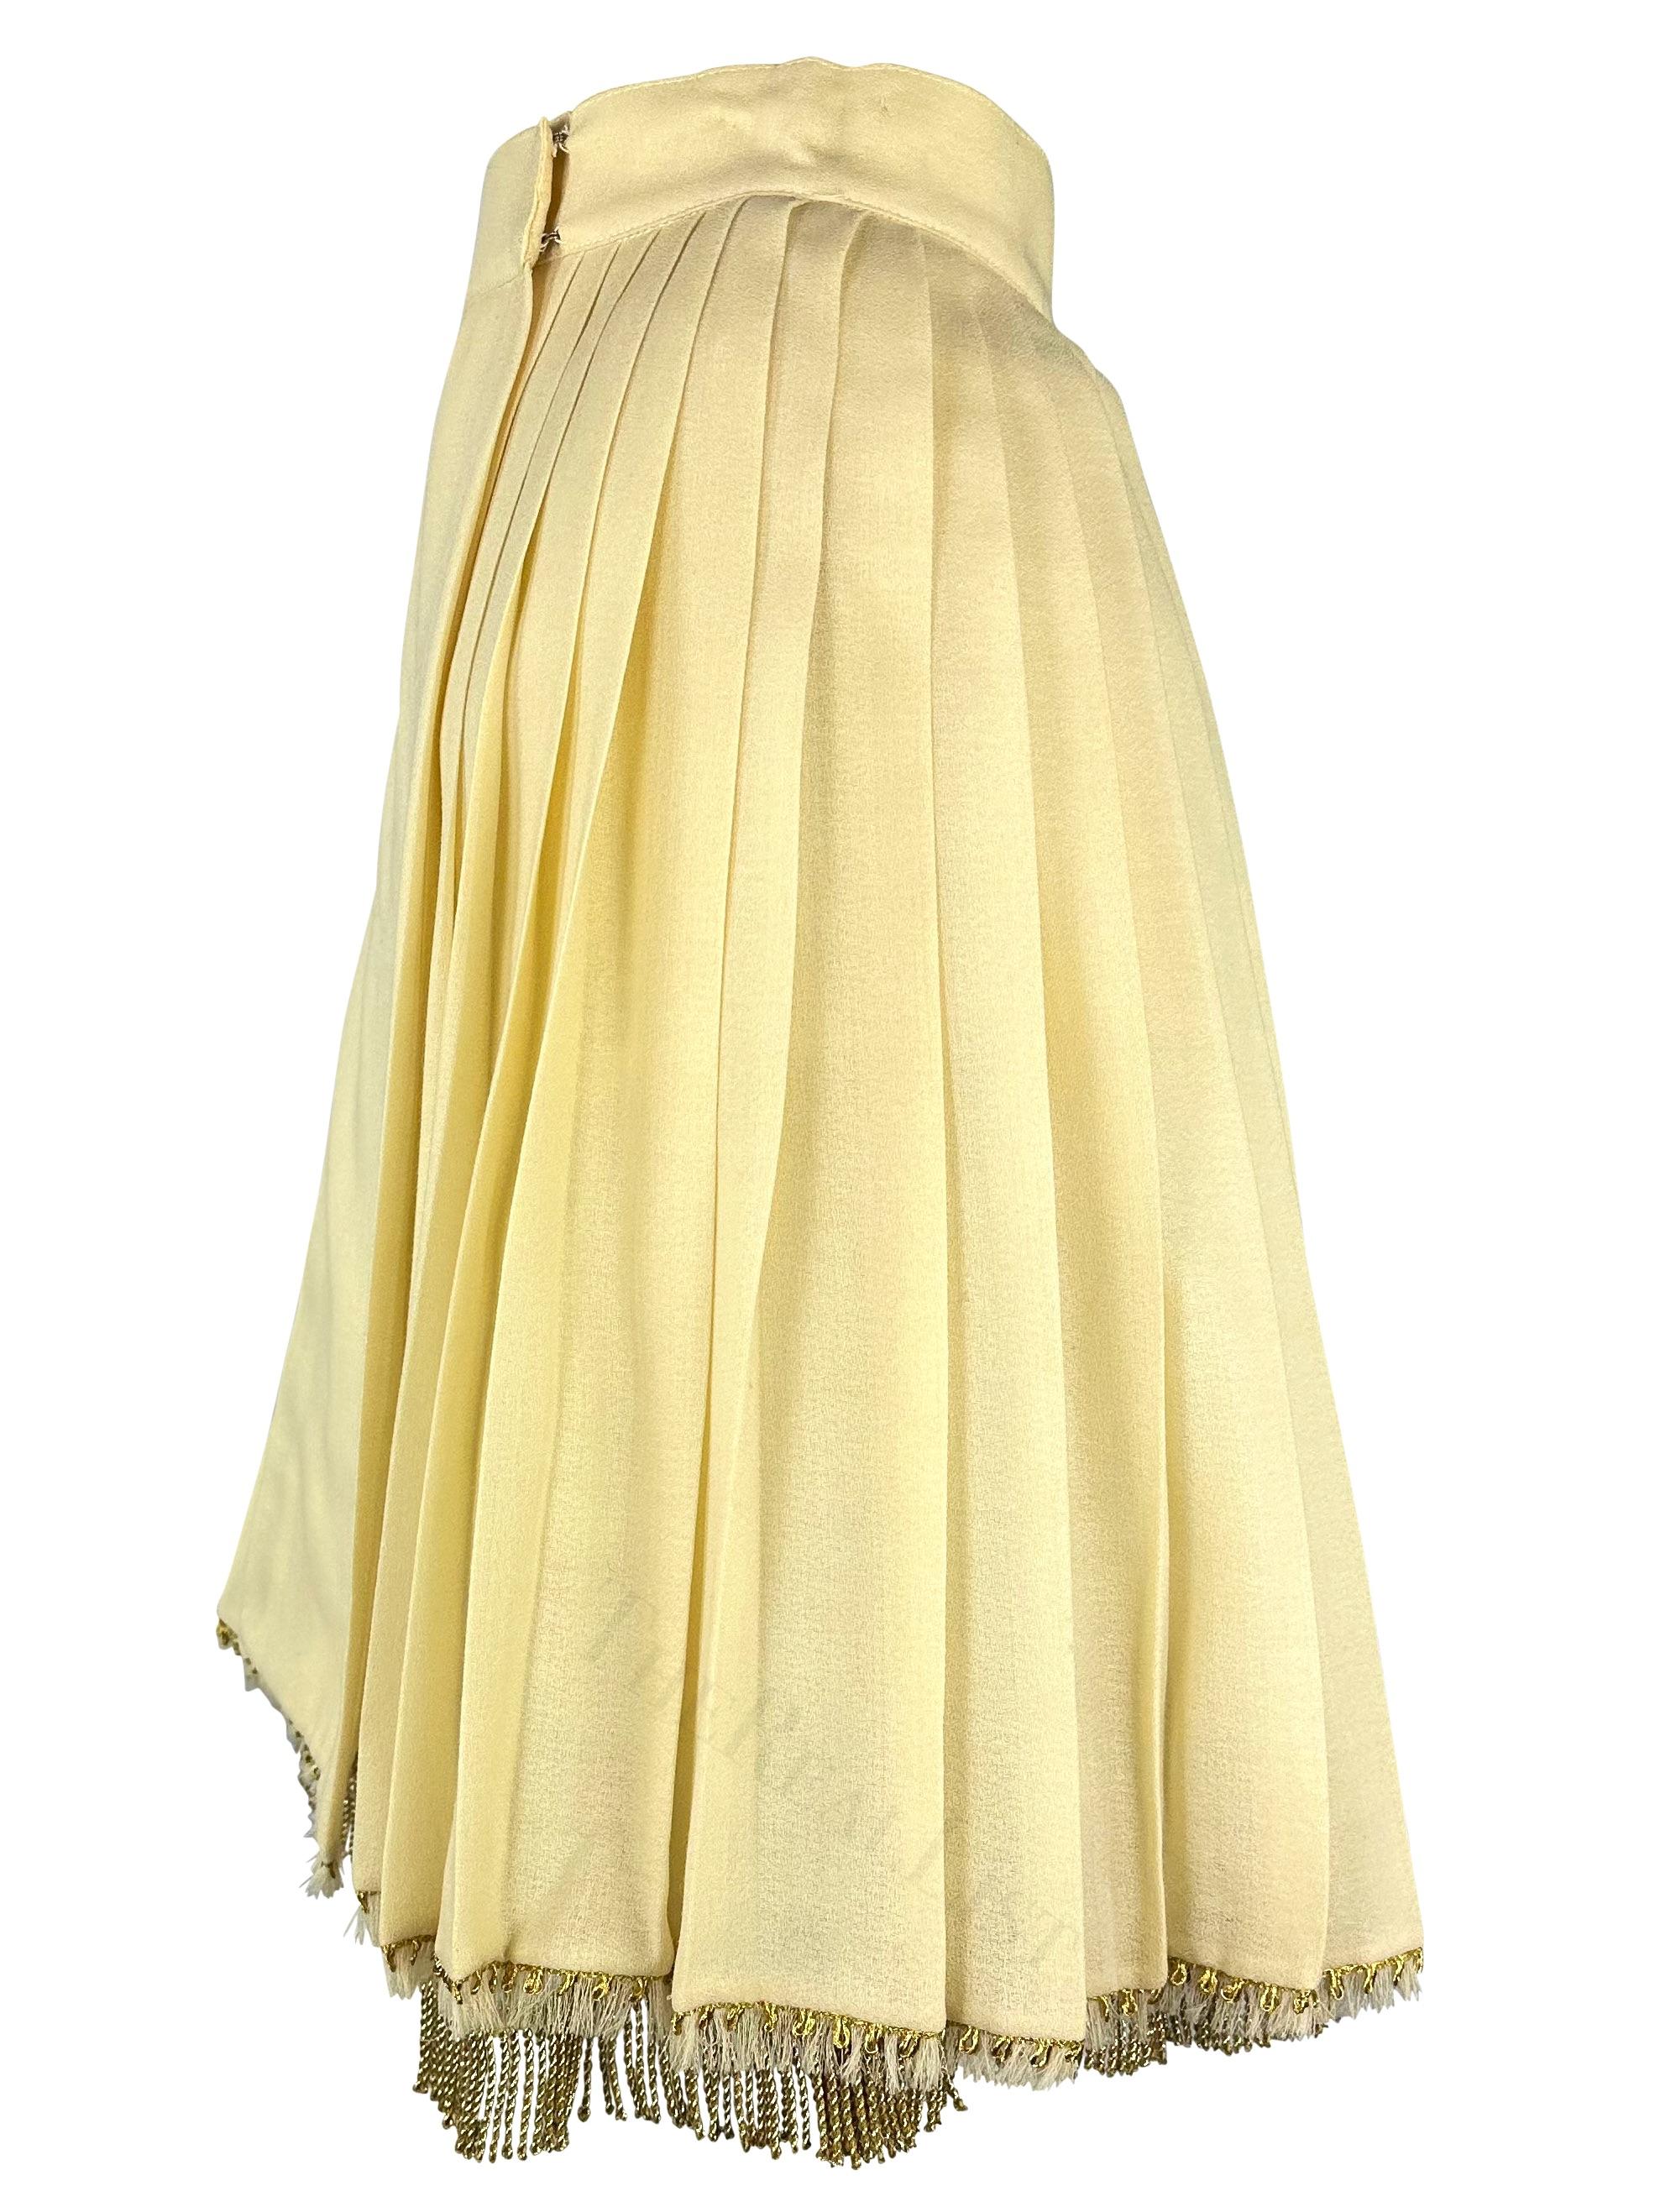 Women's S/S 1992 Gianni Versace Couture Off-White Pleat Wrap Fringe Skirt Crinoline Set For Sale